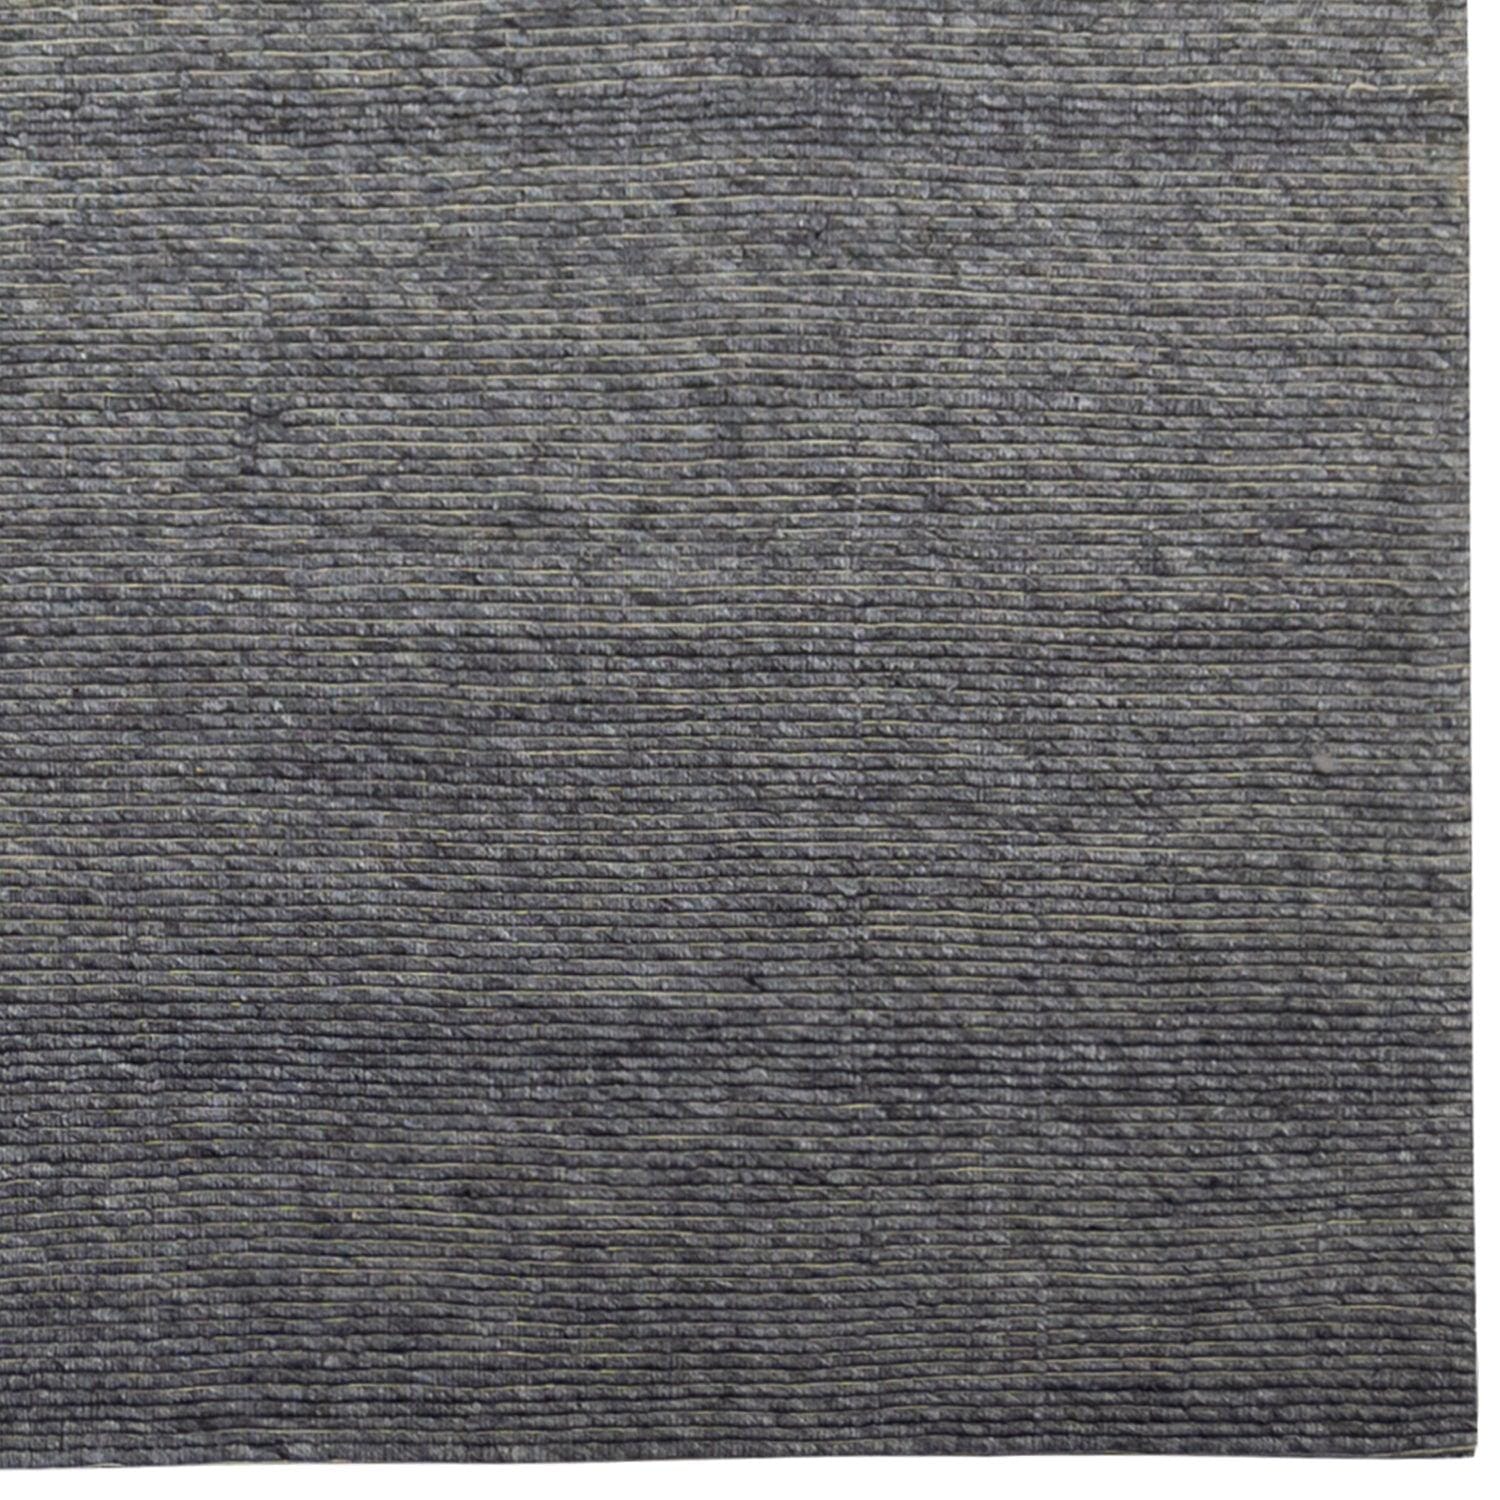 Modern Charcoal Wool Rug 161cm x 216cm